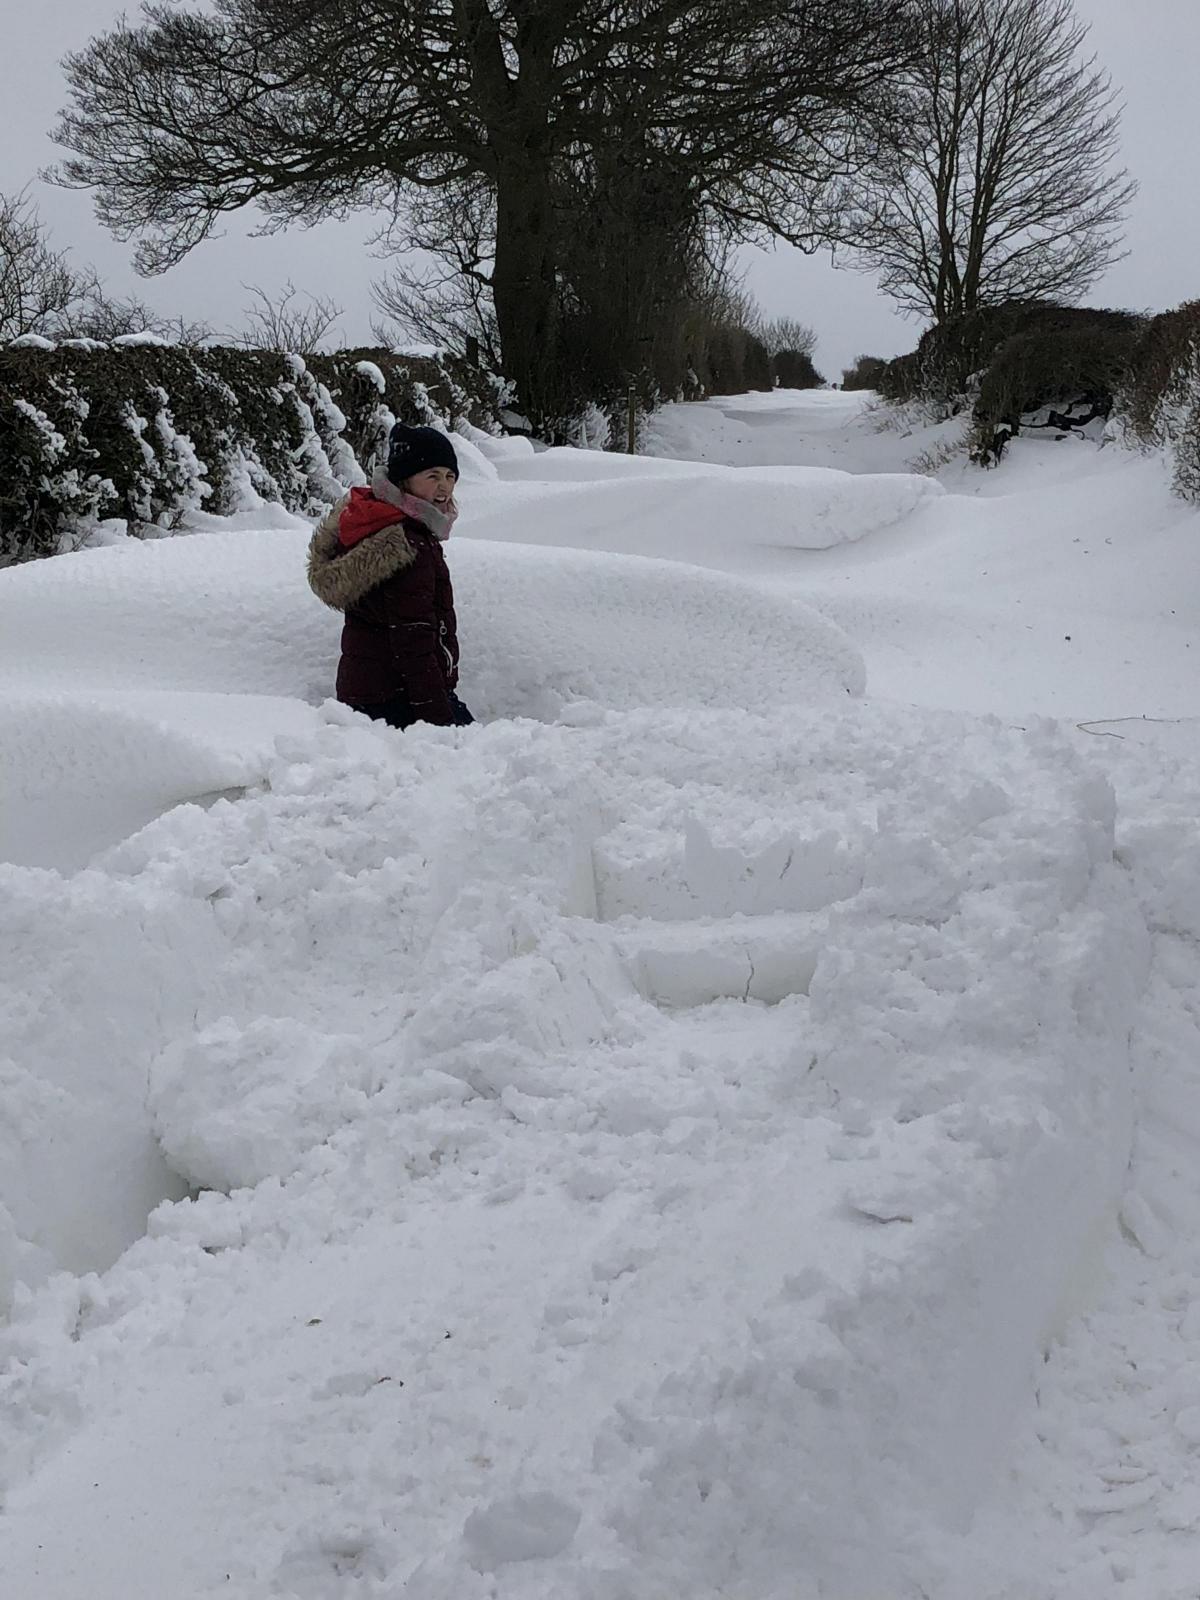 Snow drifts in Lockton Matilda Gledhill age 12 with her dog Rosie  Picture by Jane Gledhill